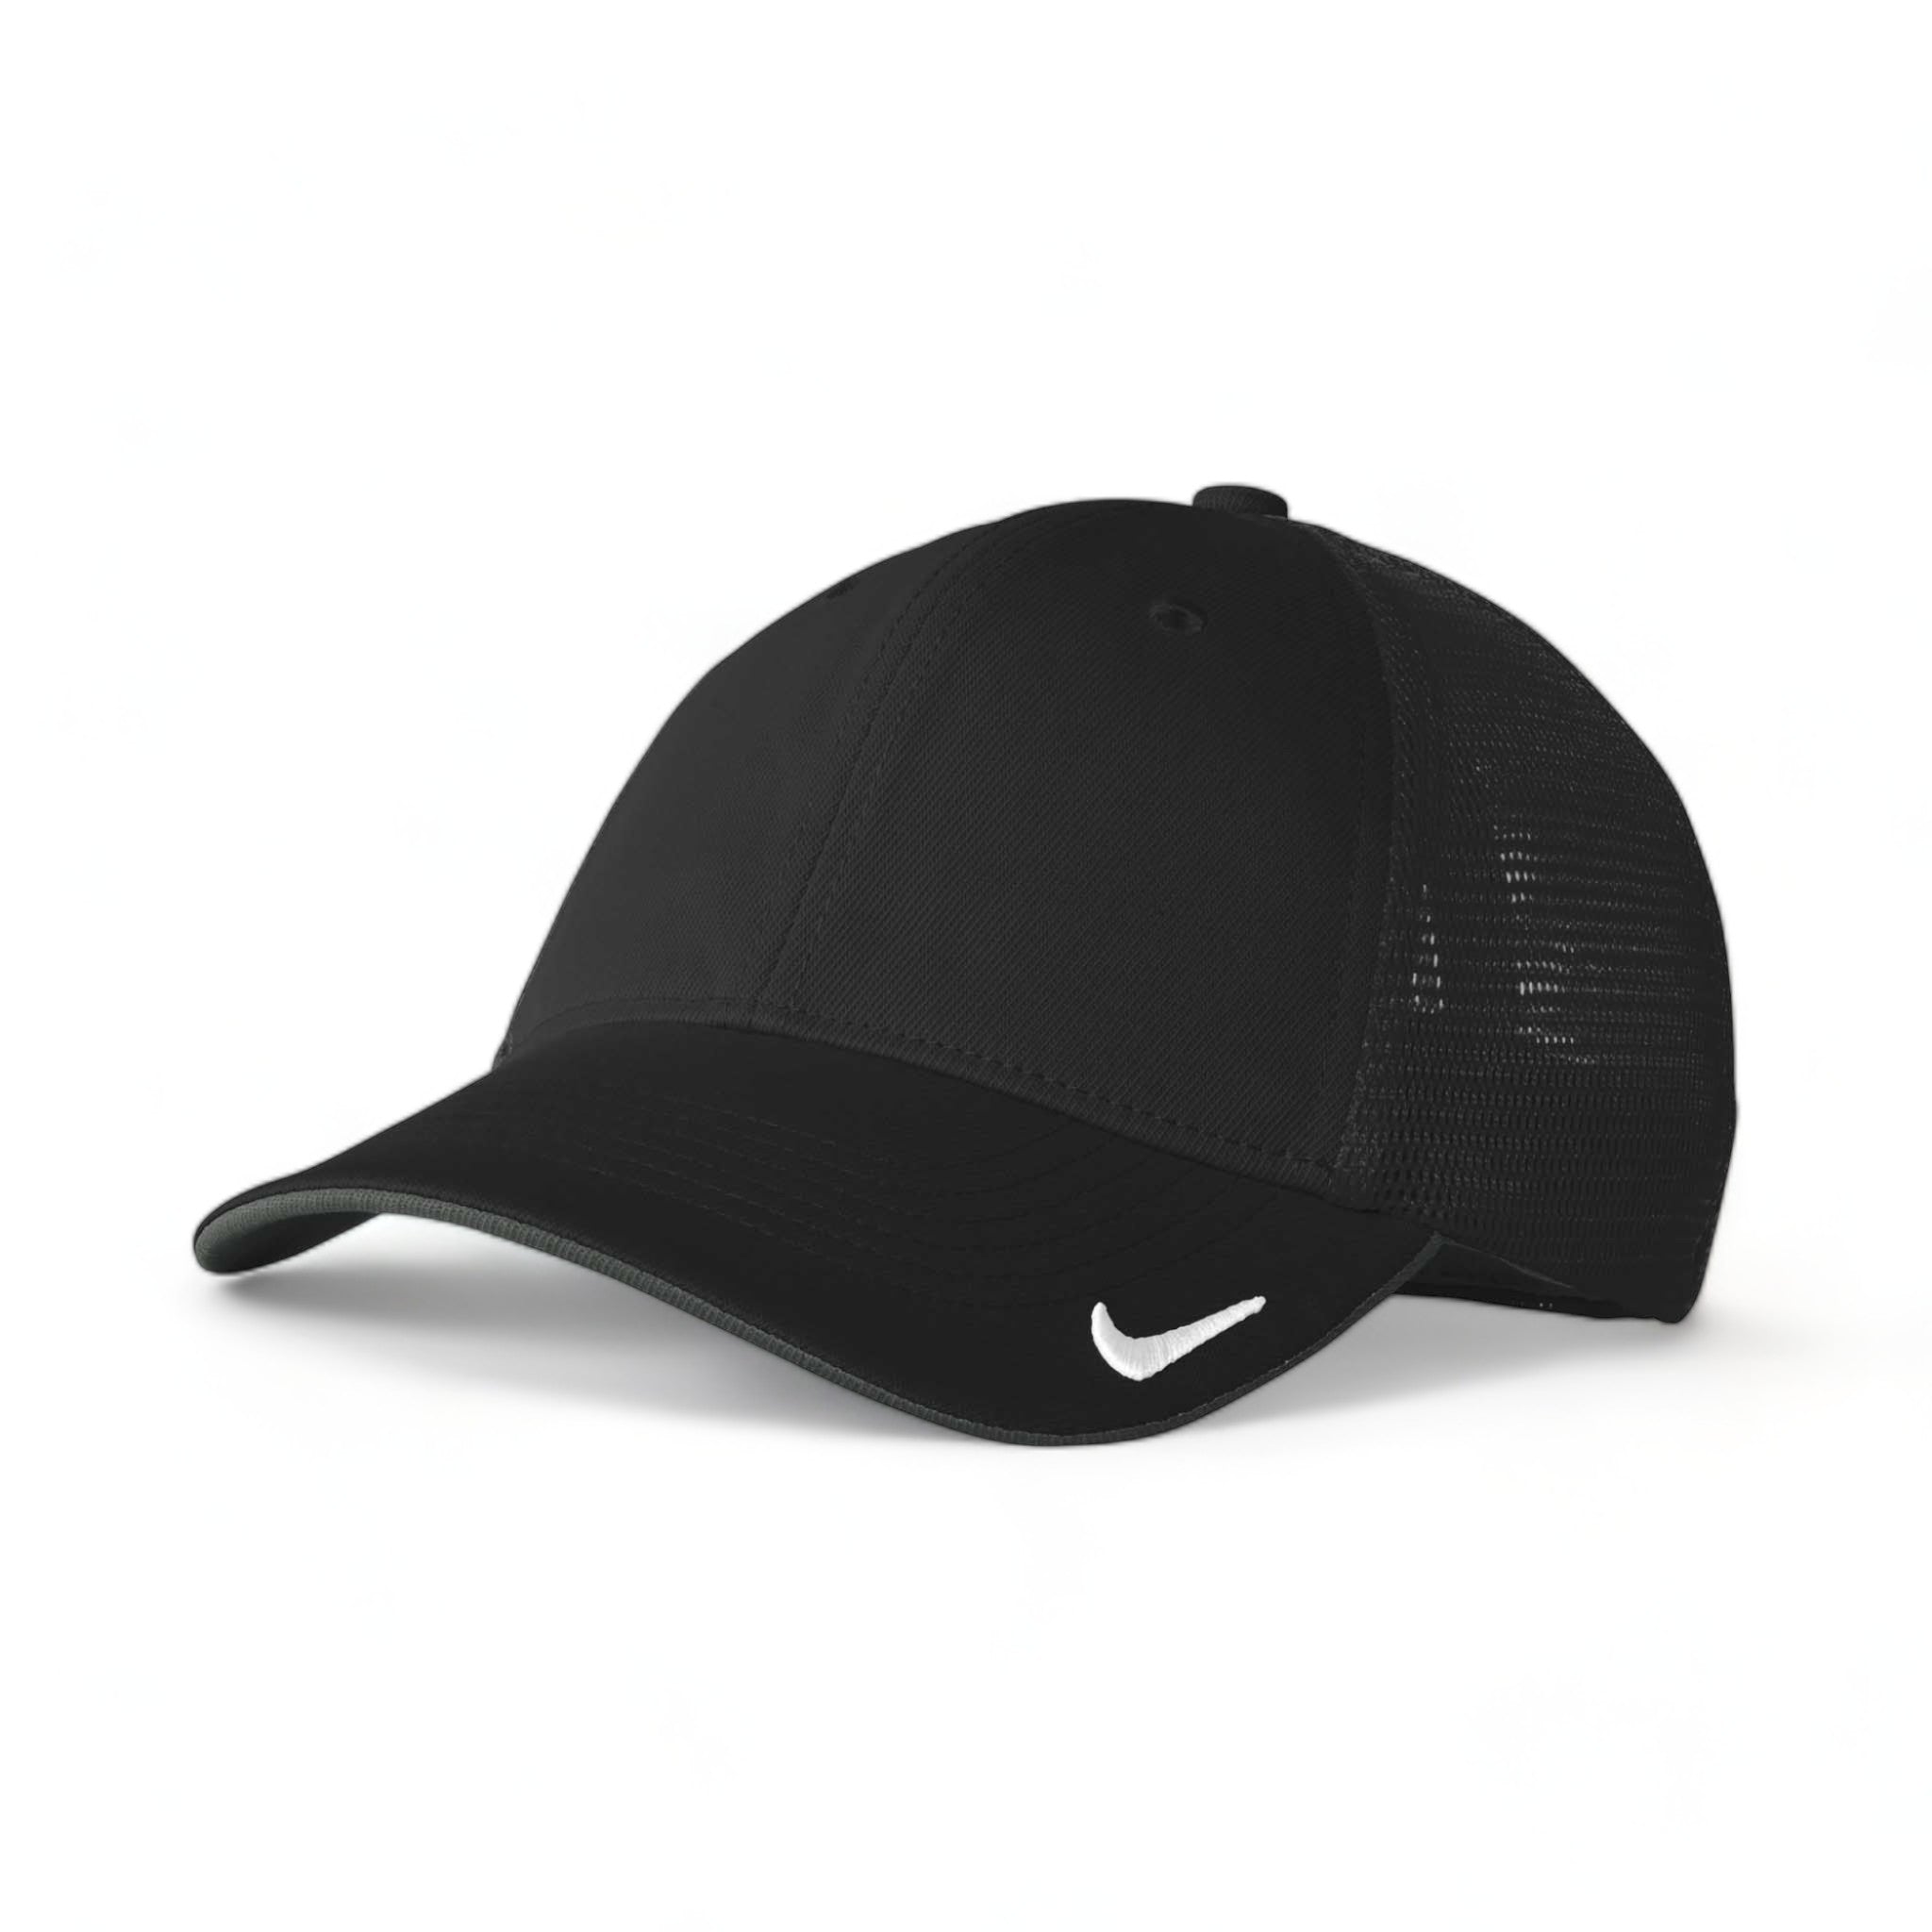 Side view of Nike NKFB6448 custom hat in black and black